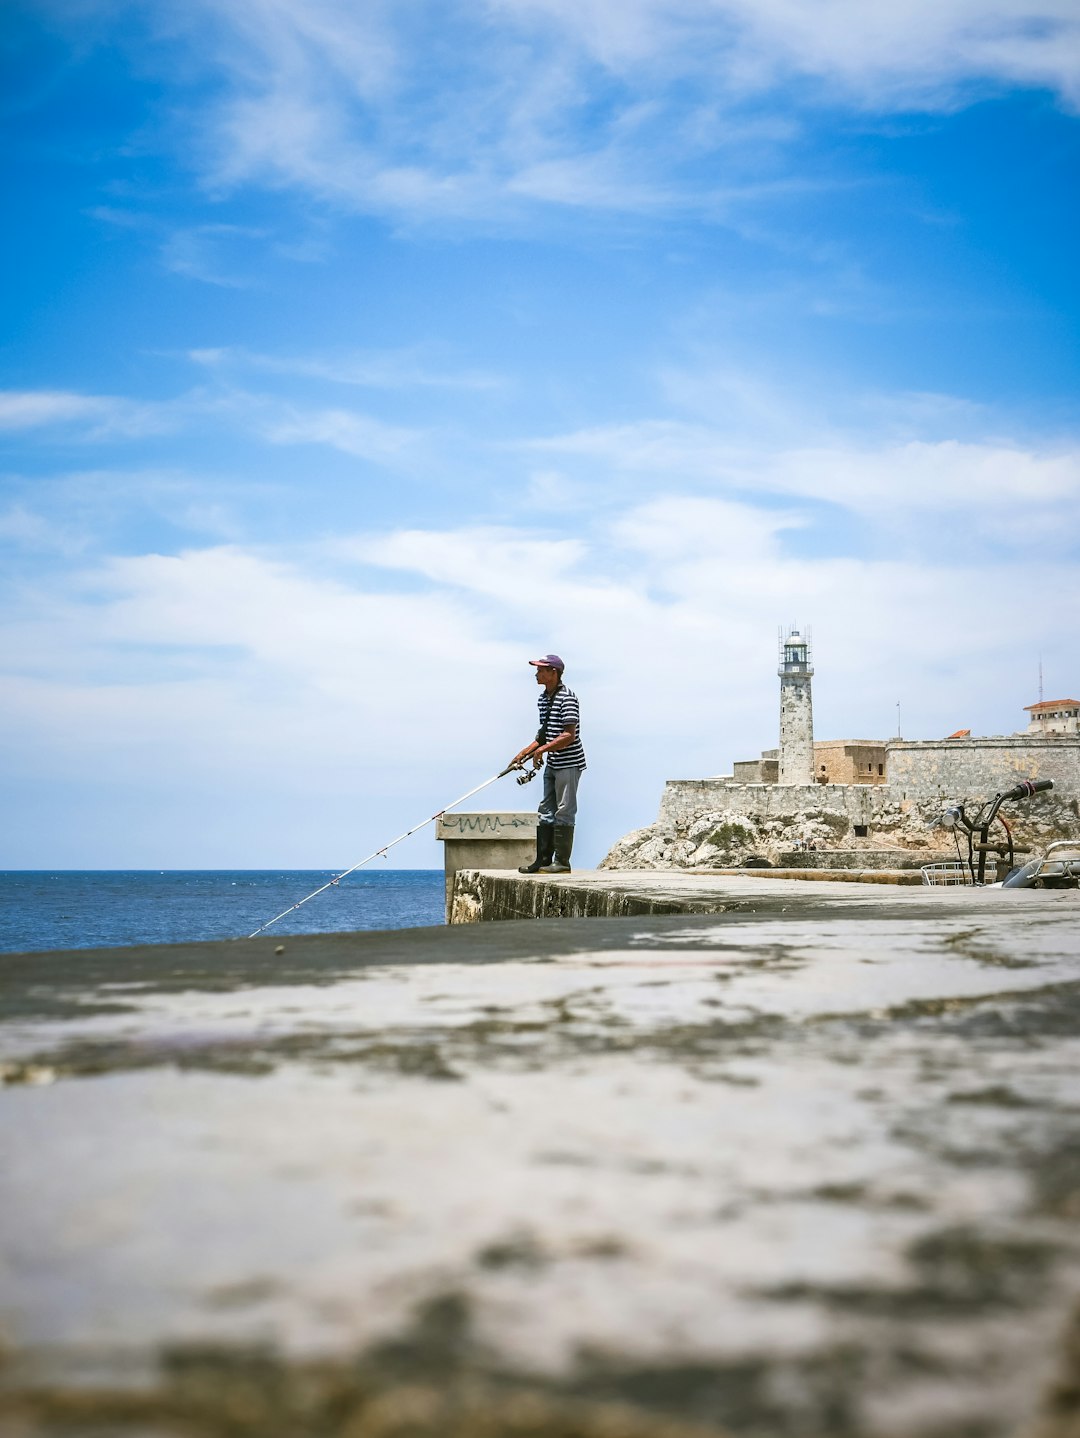 Travel Tips and Stories of Havana in Cuba